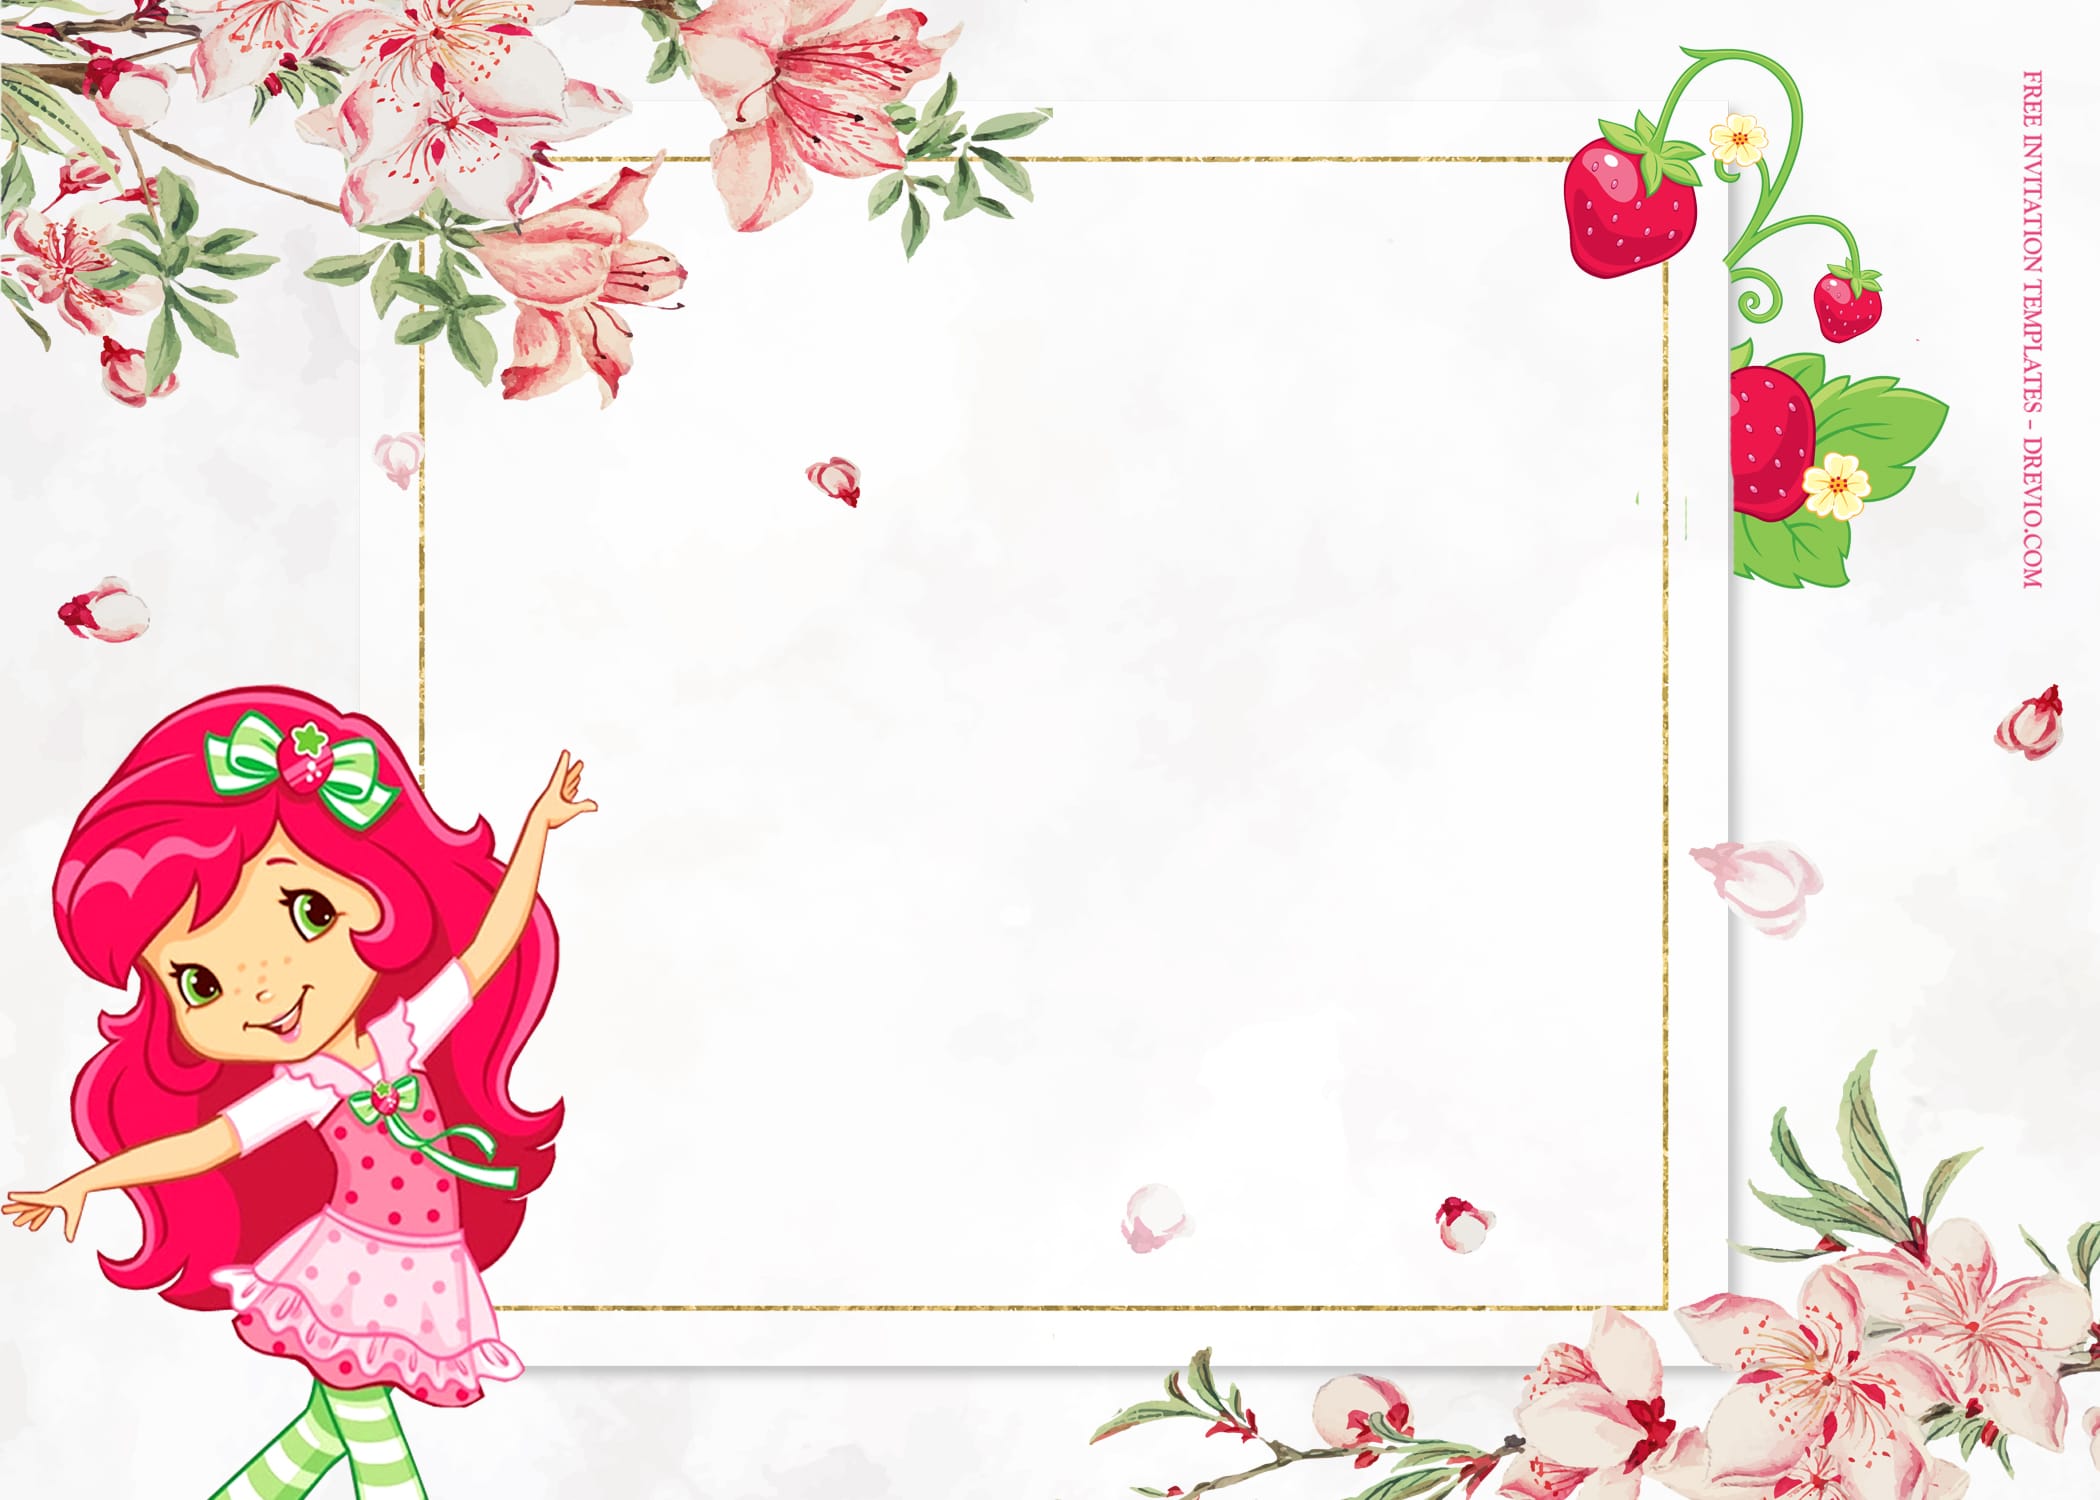 8+ Strawberry Shortcake With Sakura Blossom Birthday Invitation Templates Type FOur